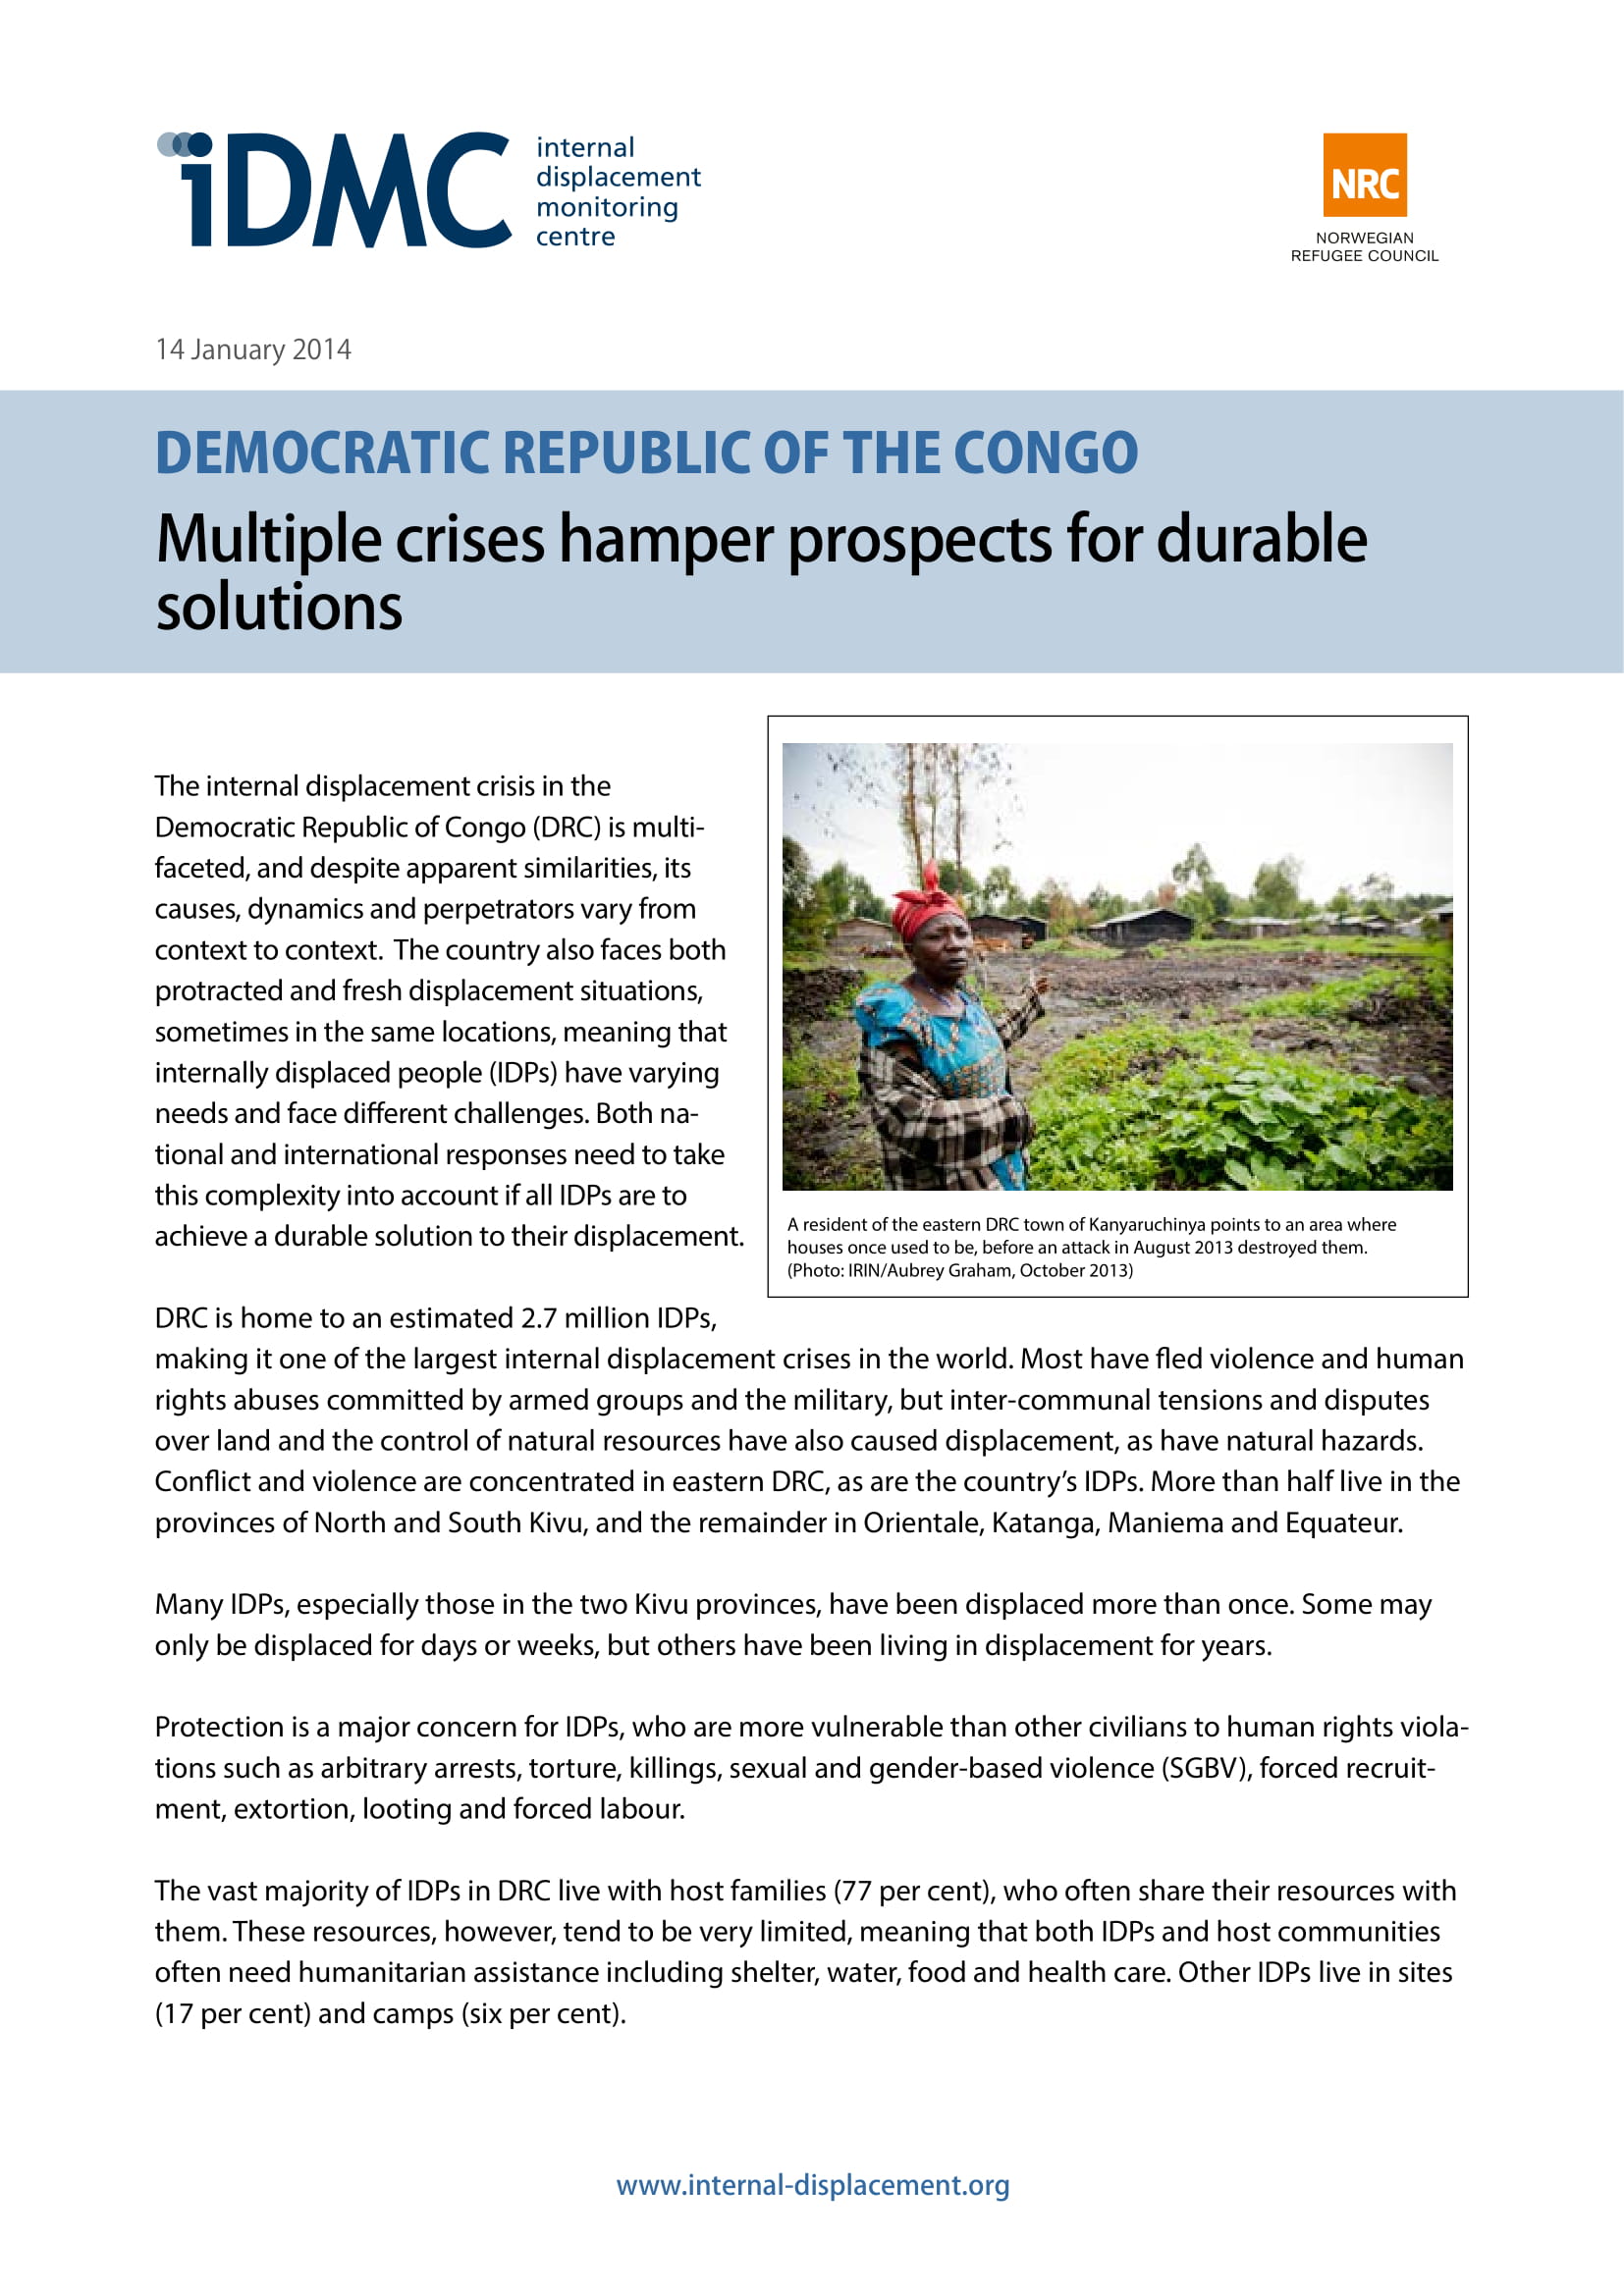 Democratic Republic of the Congo: Multiple crises hamper prospects for durable solutions